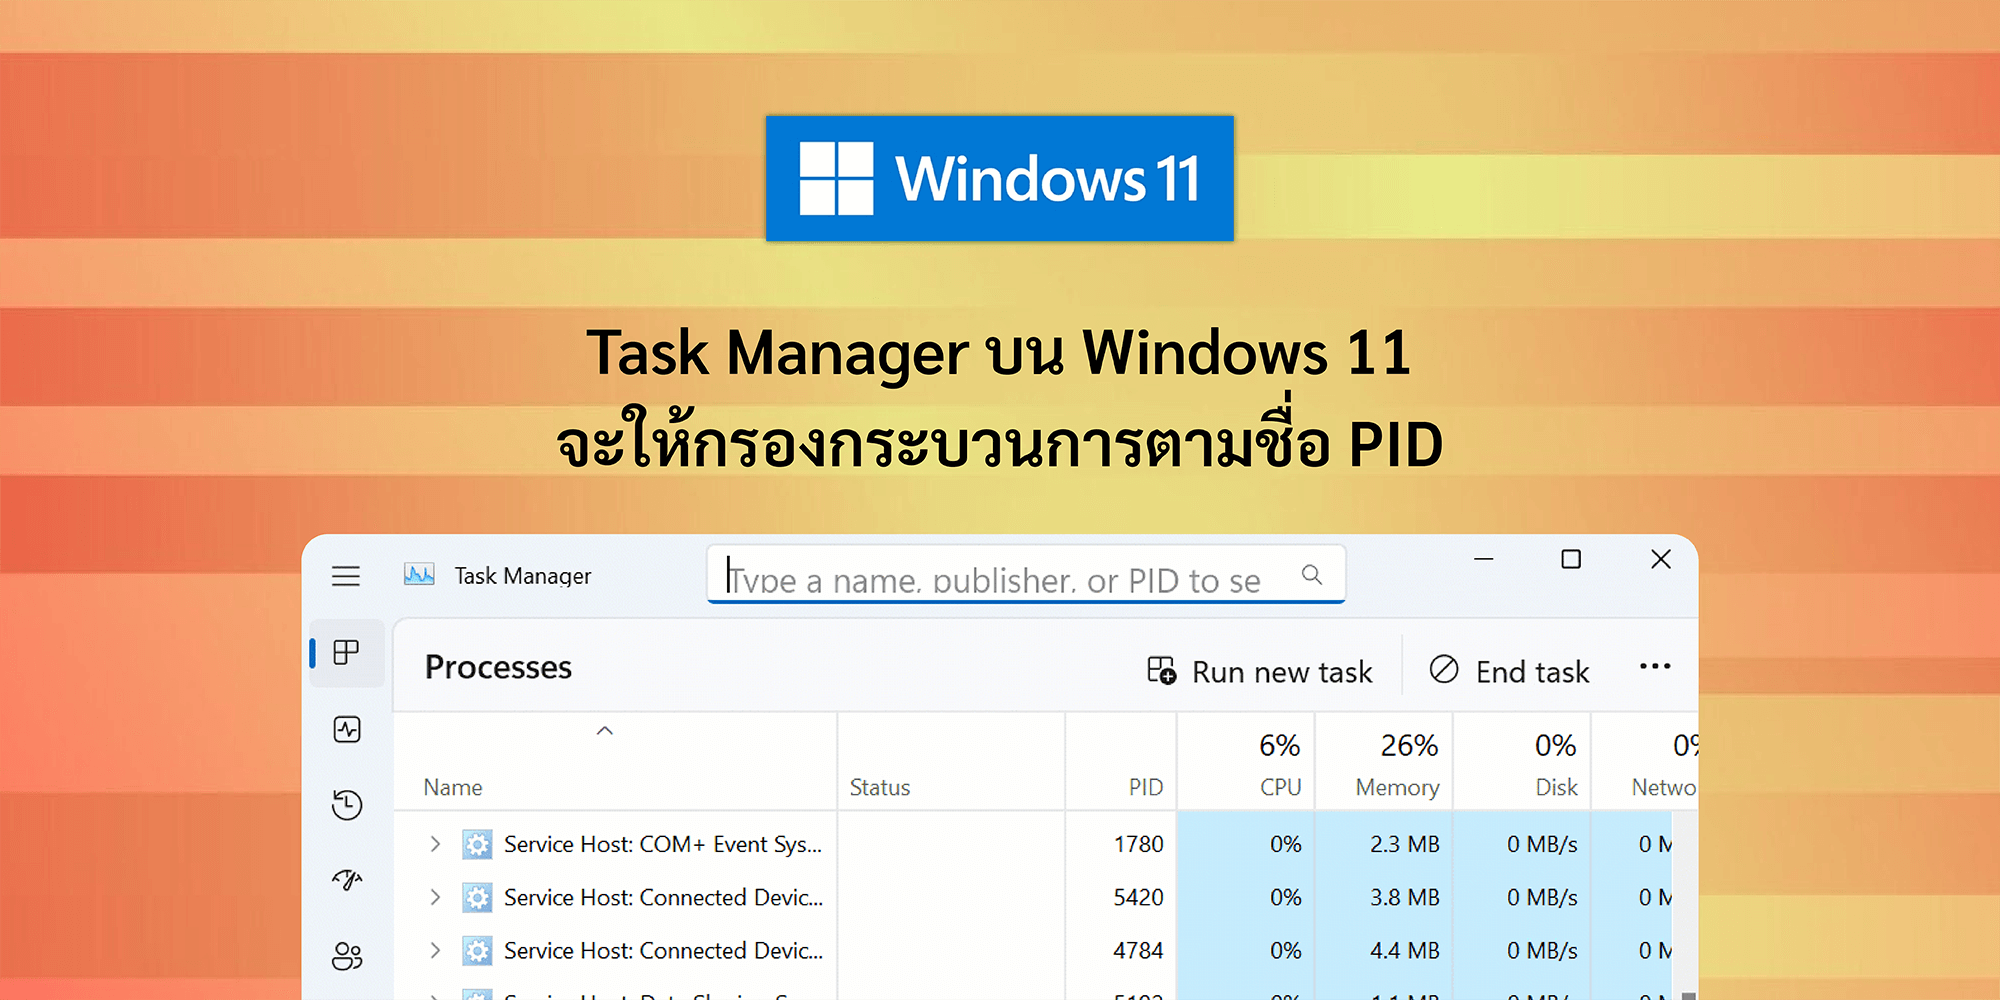 Task Manager บน Windows 11 จะให้กรองกระบวนการตามชื่อ PID